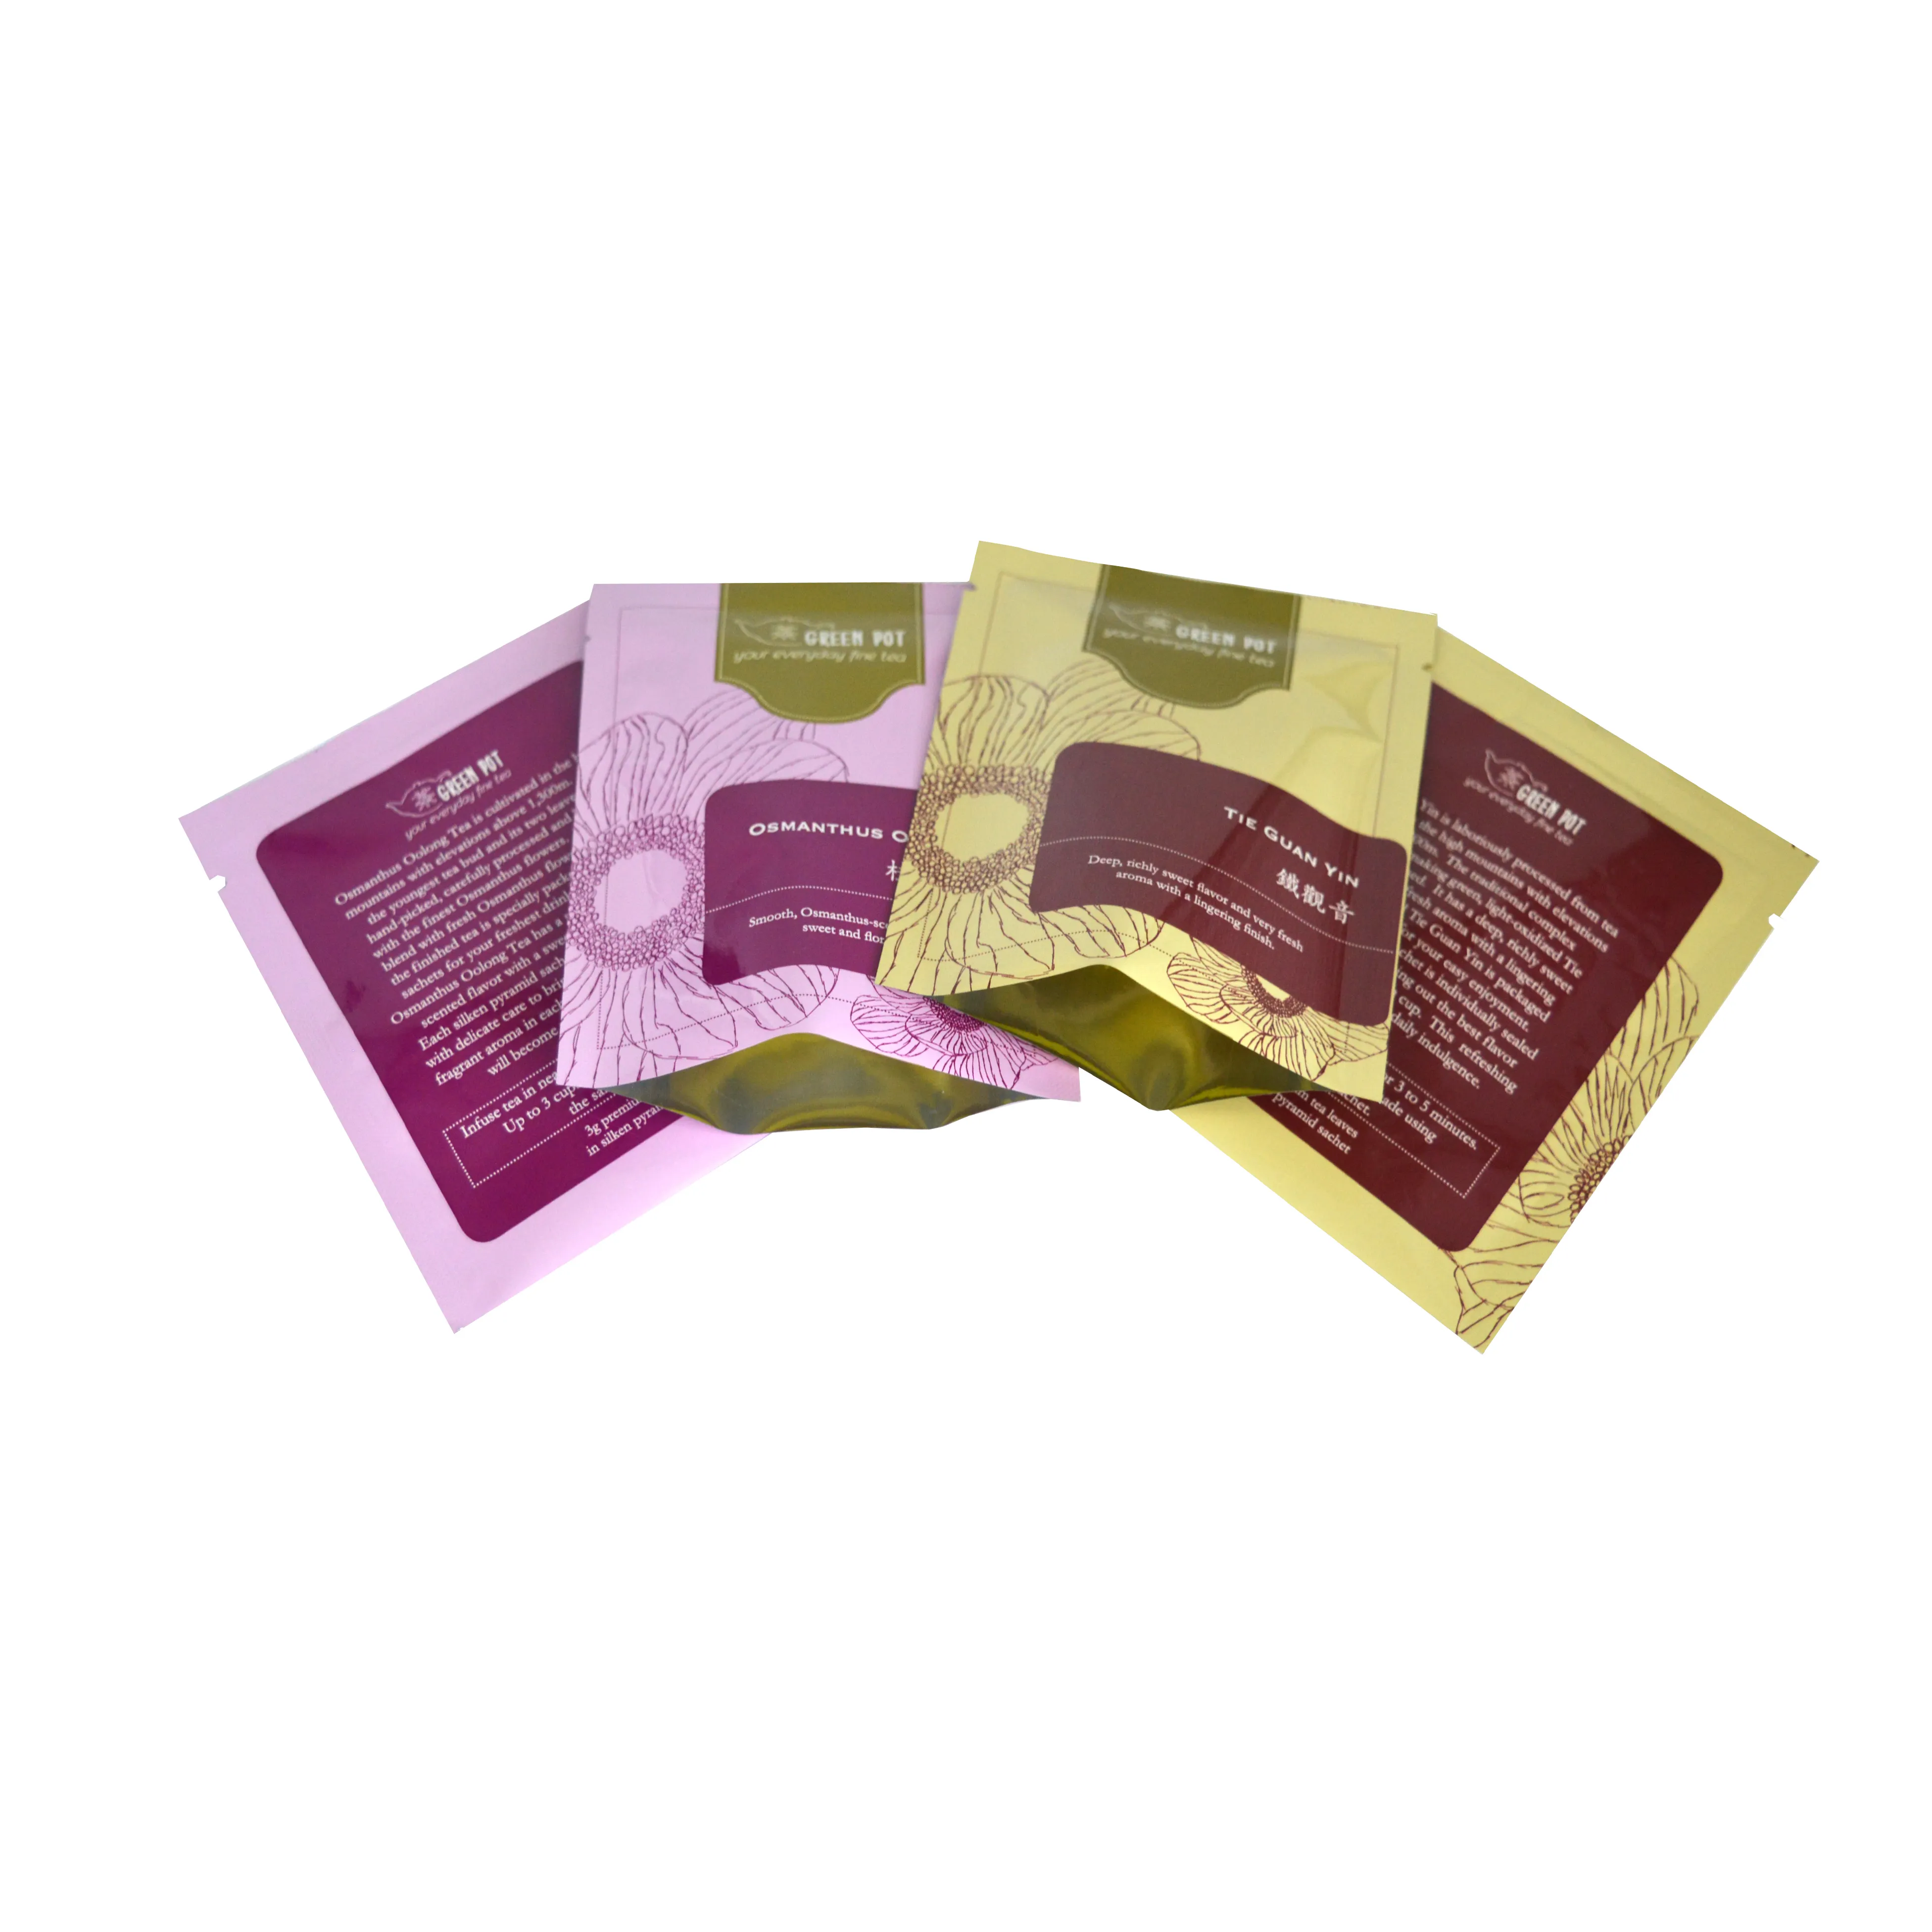 Venta caliente de encargo impreso bolsa de té sellado térmico sobre individualmente envuelto de embalaje de té